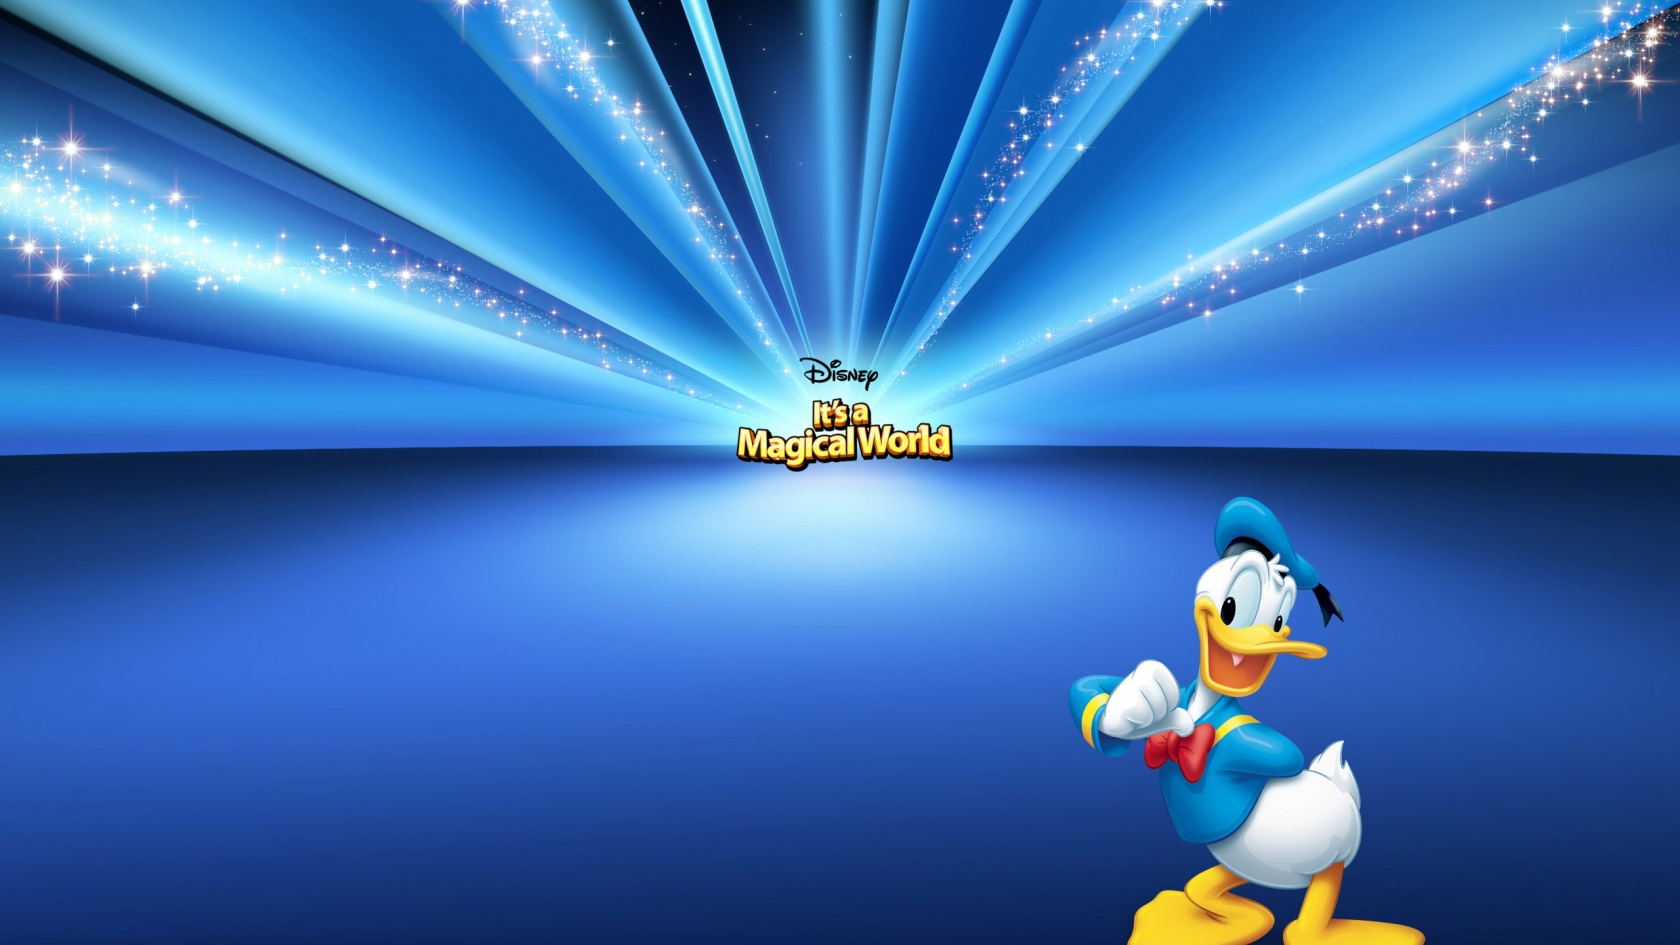 Donald Duck Cartoon for 1680 x 945 HDTV resolution